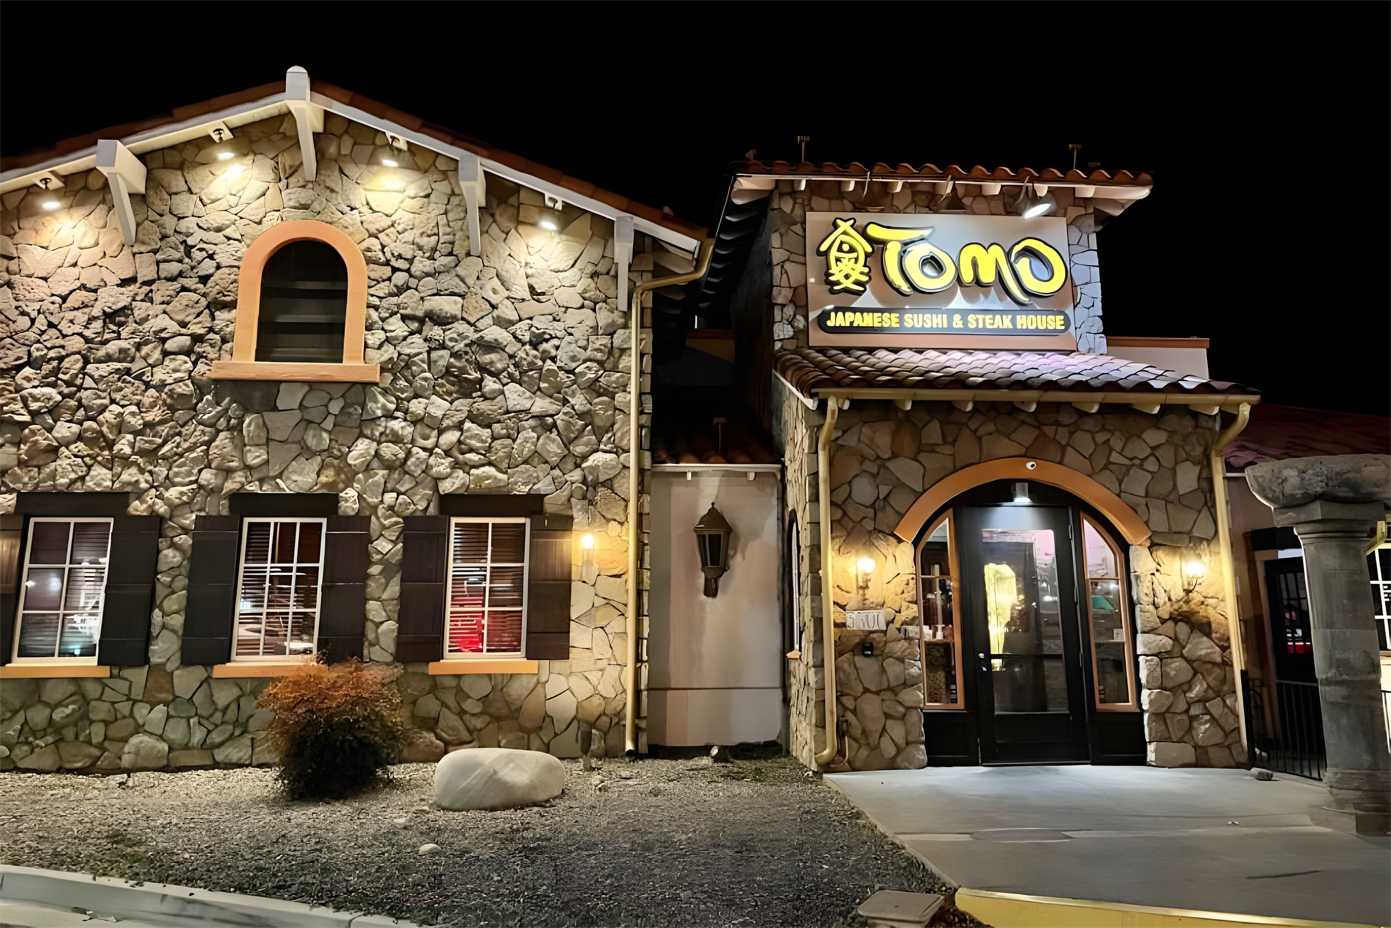 Tomo Japanese Sushi and Steak House Best Restaurants in Farmington, NM 